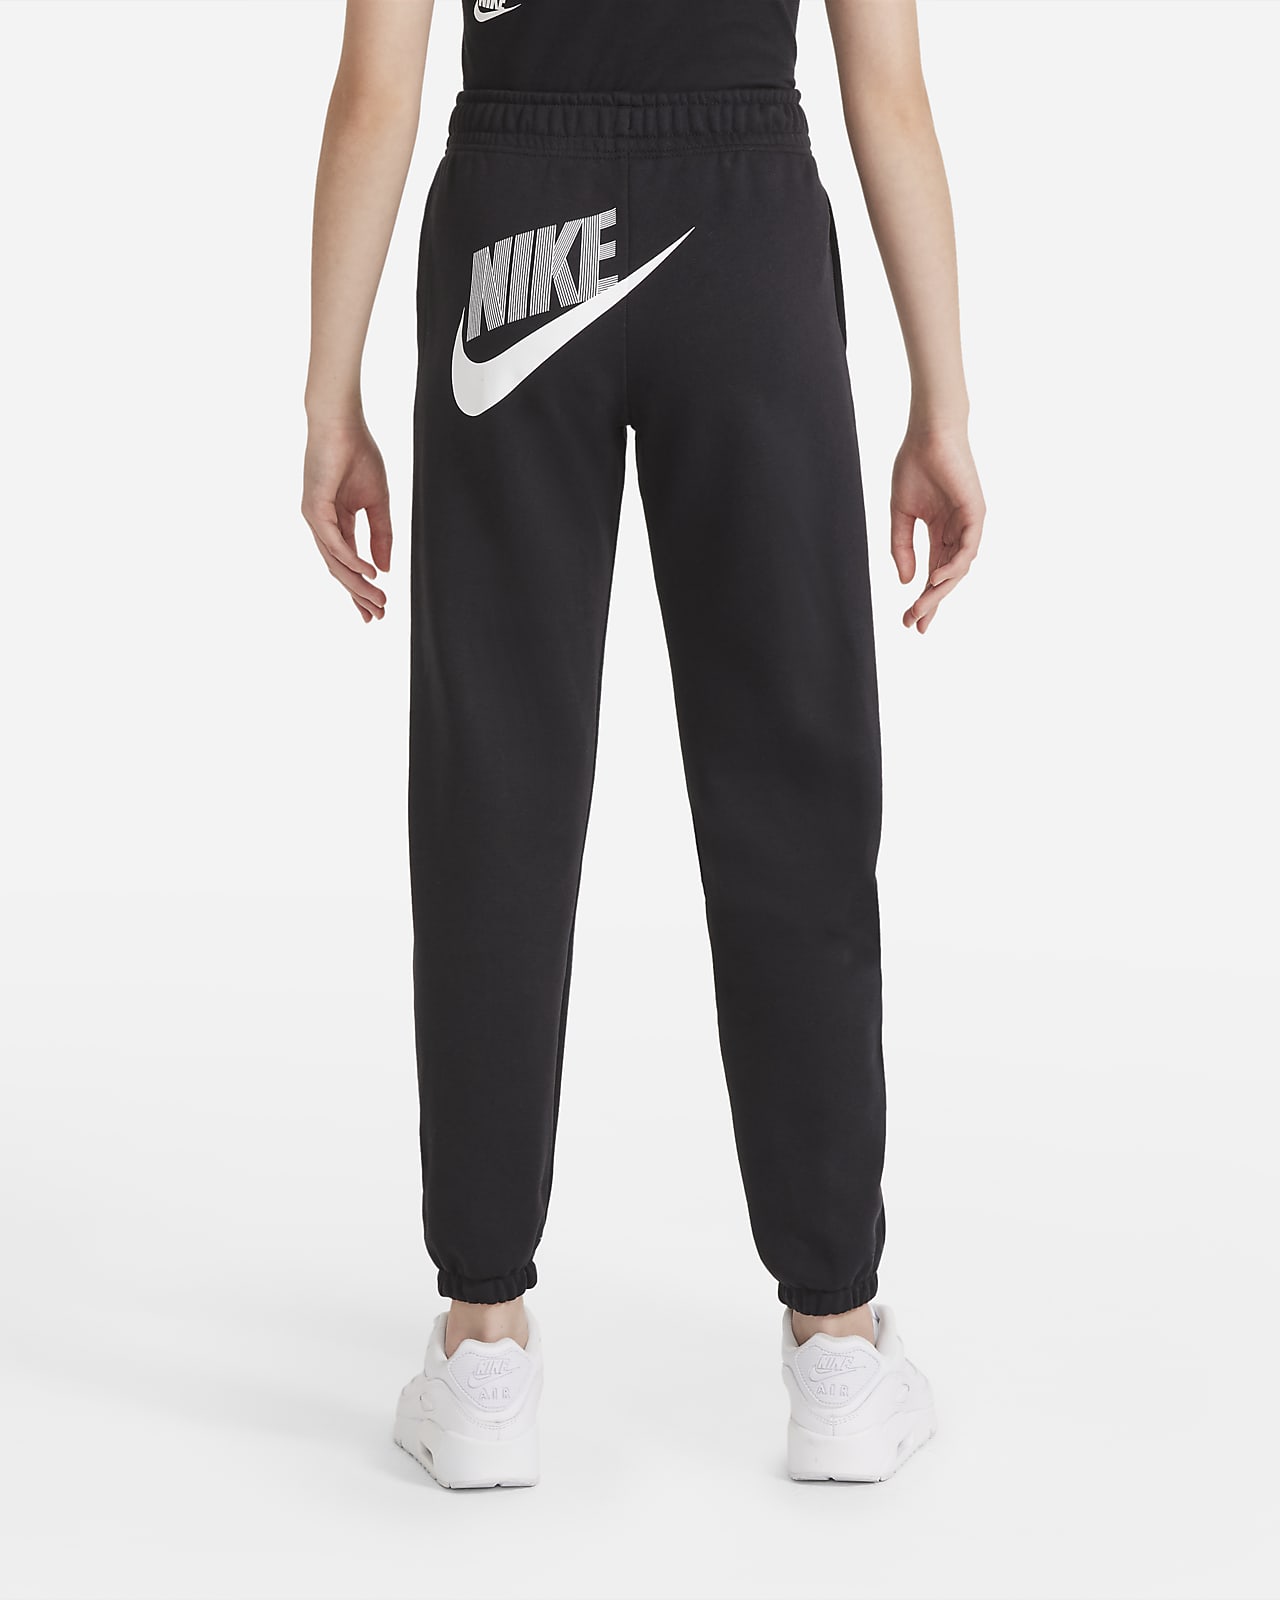 Trousers Black Dance Phoenix Fleece. Nike.com